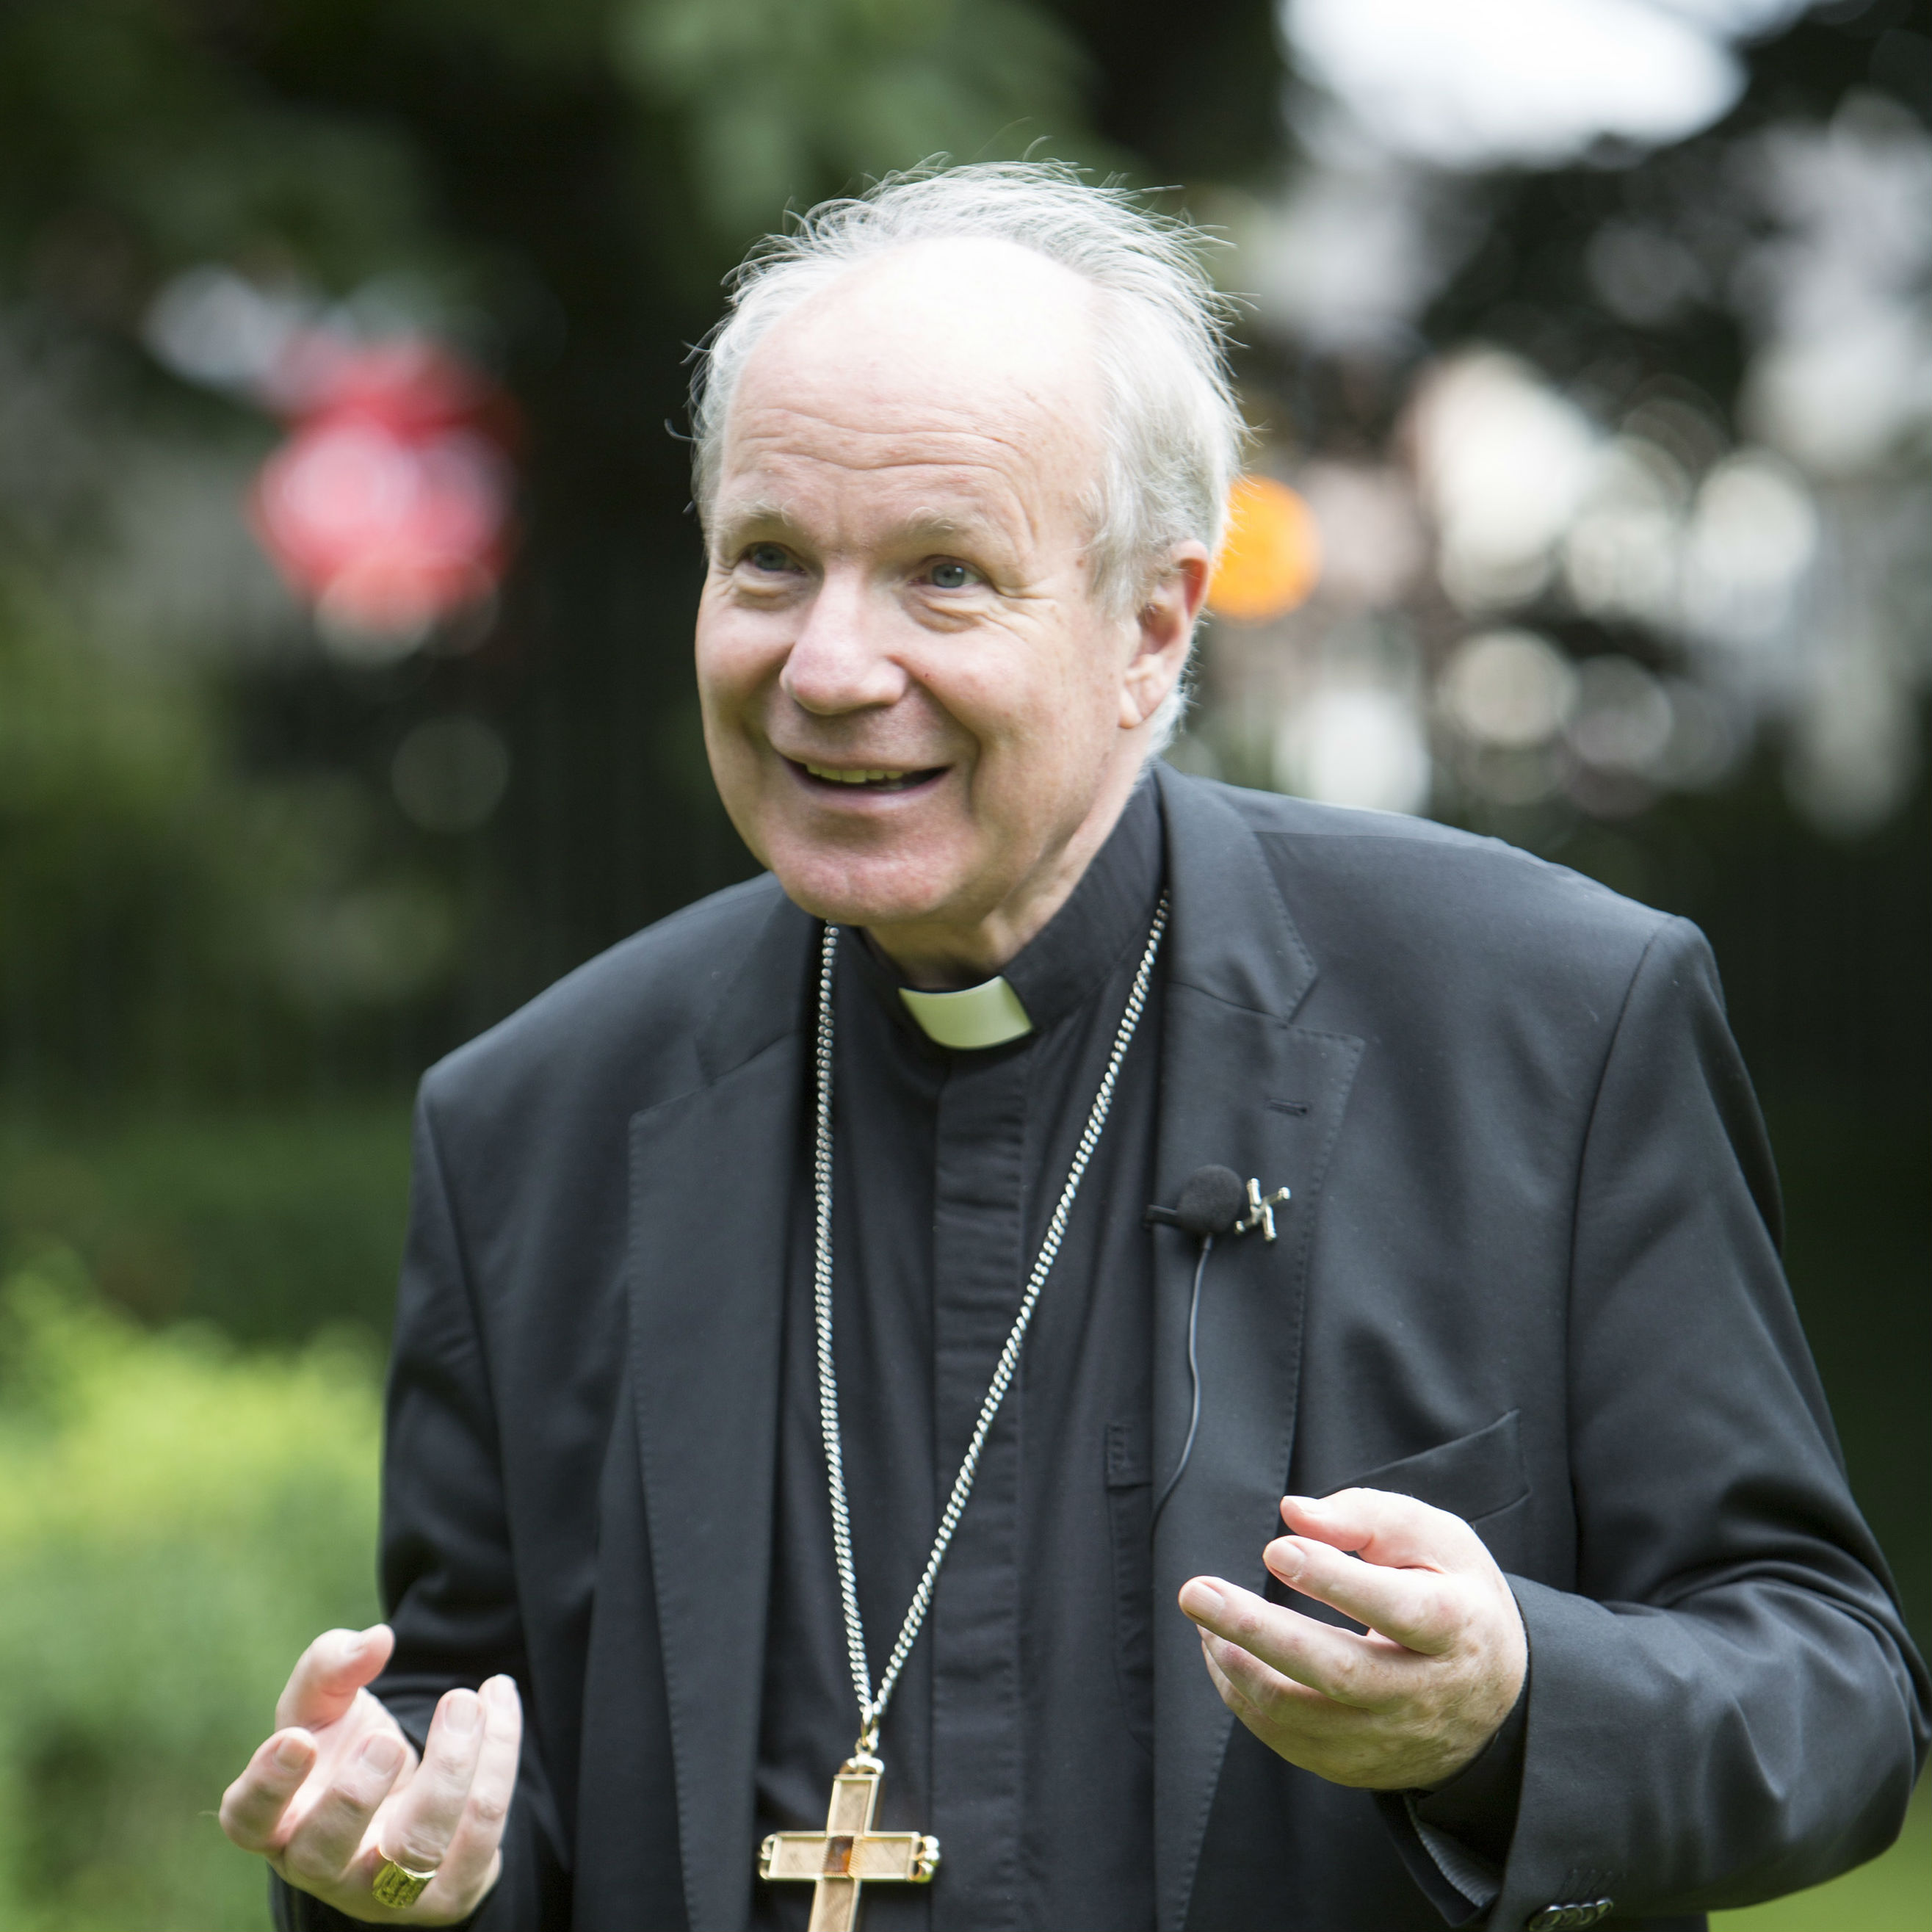 Cardinal Schonborn: Church doing best to strengthen families of all types